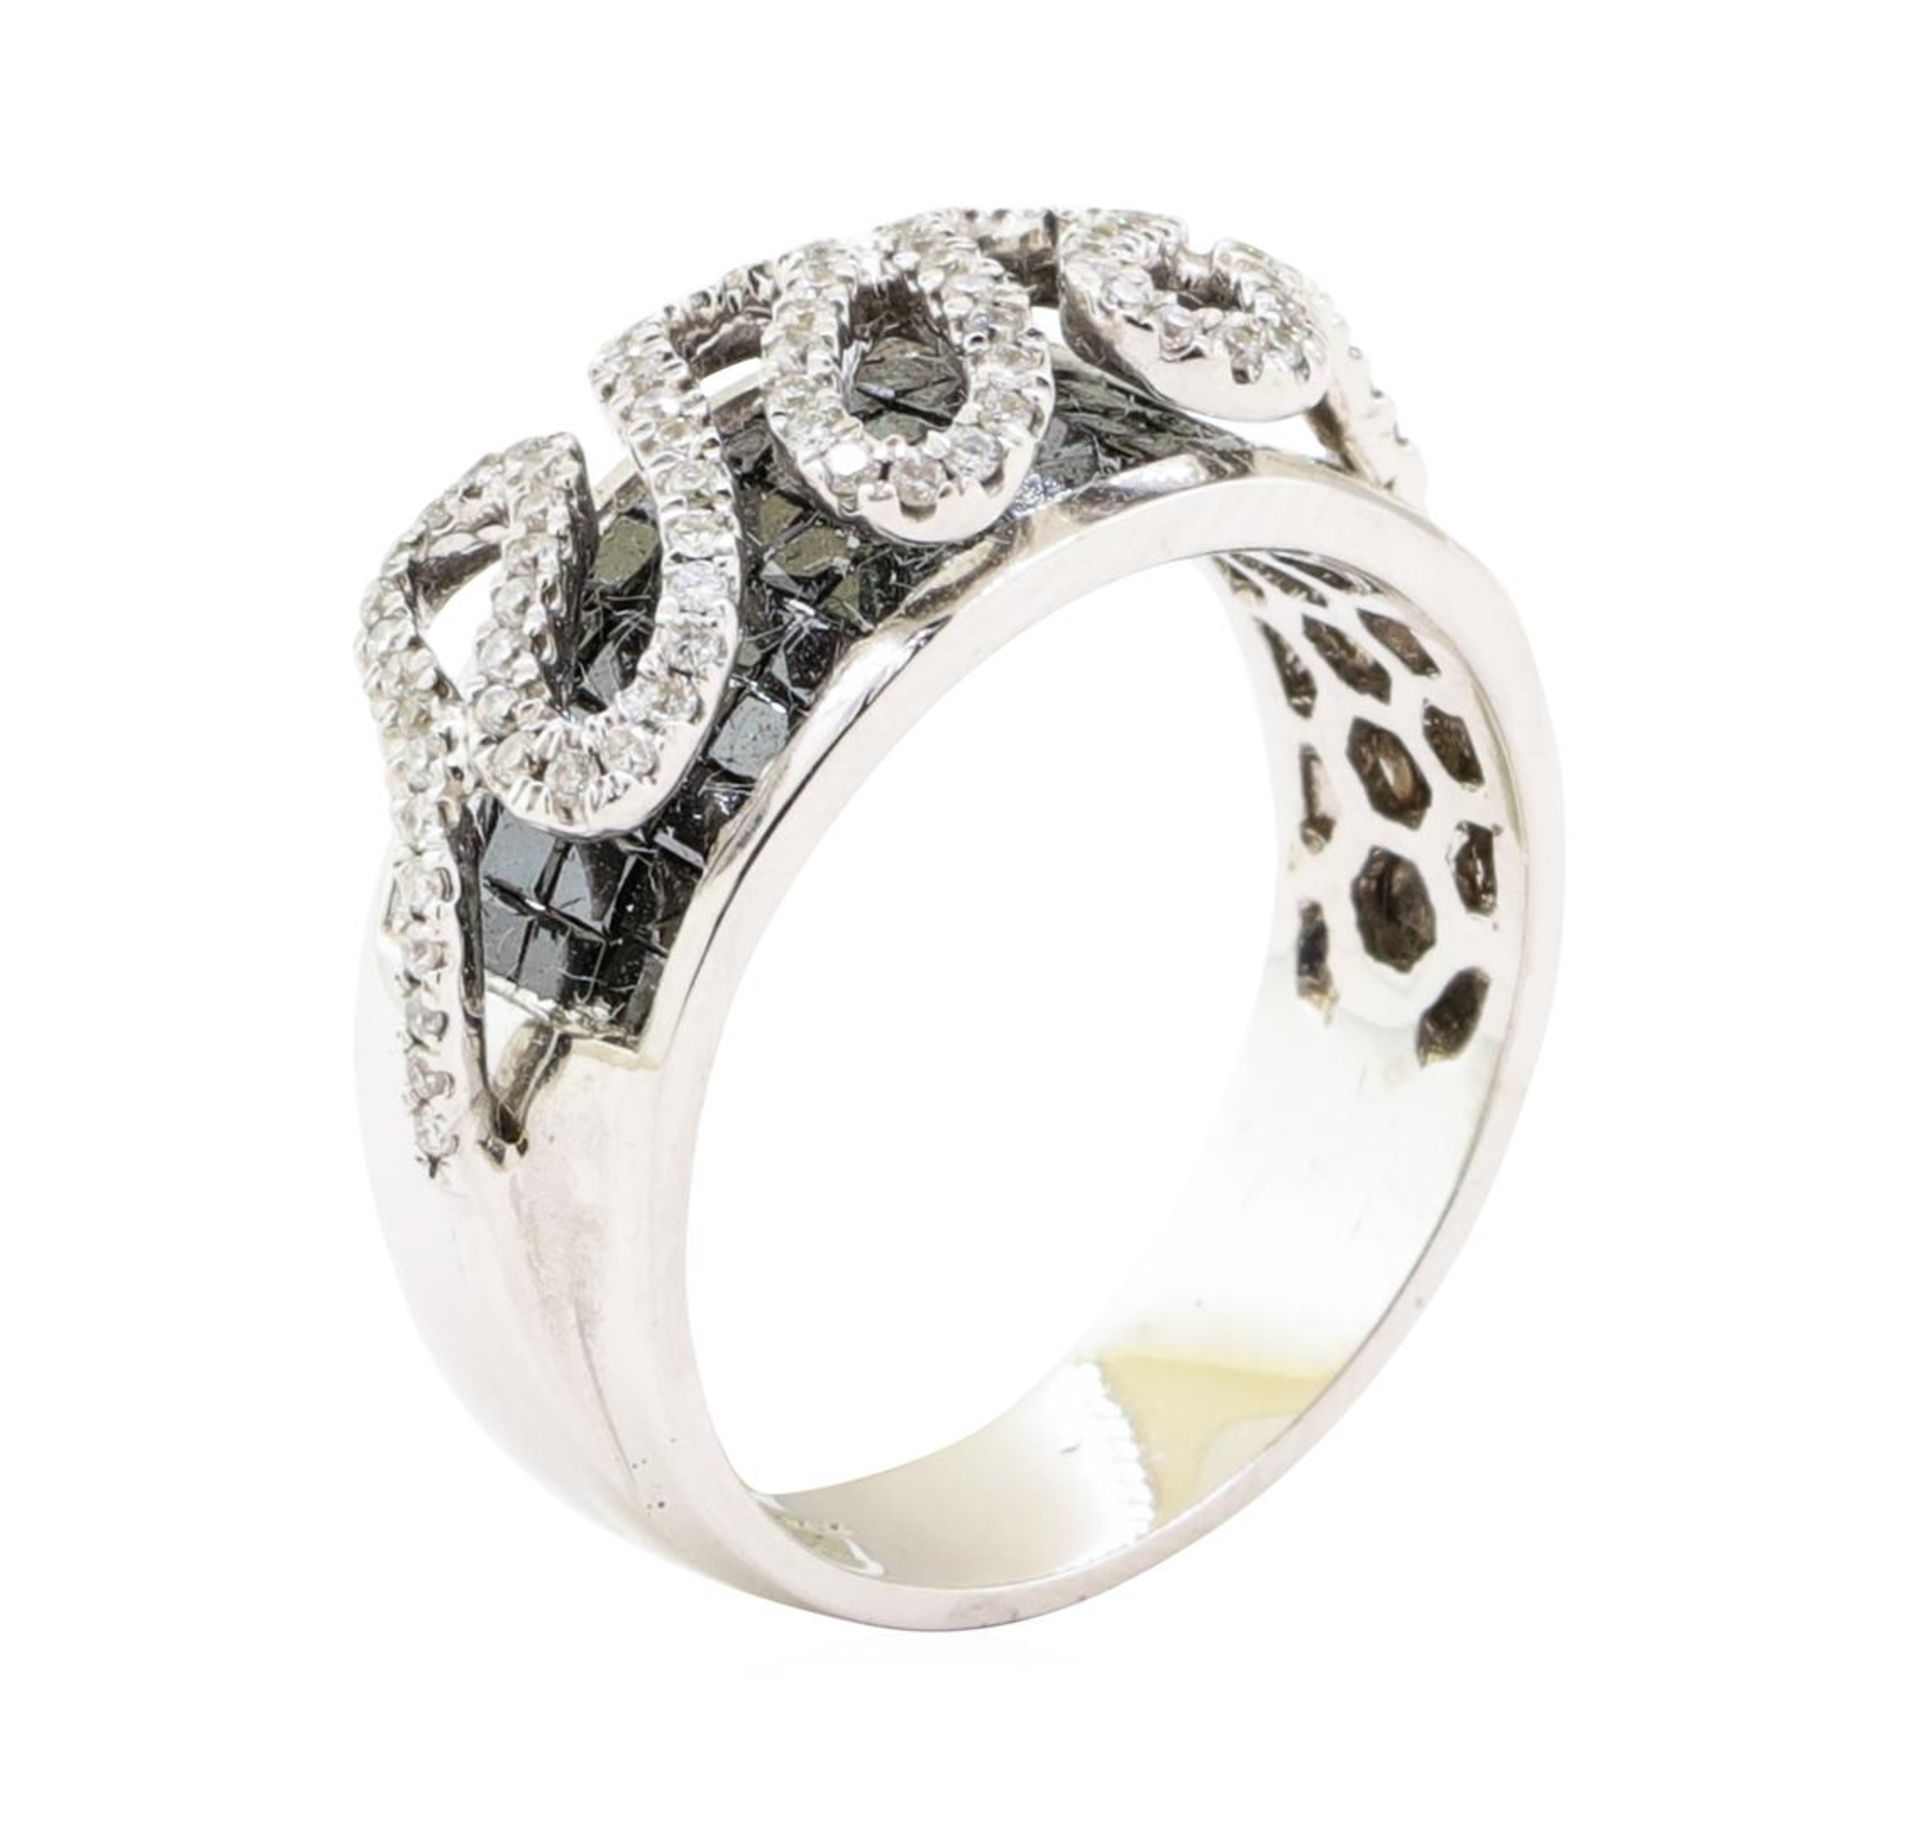 1.68 ctw Black and White Diamond Ring - 14KT White Gold - Image 4 of 4